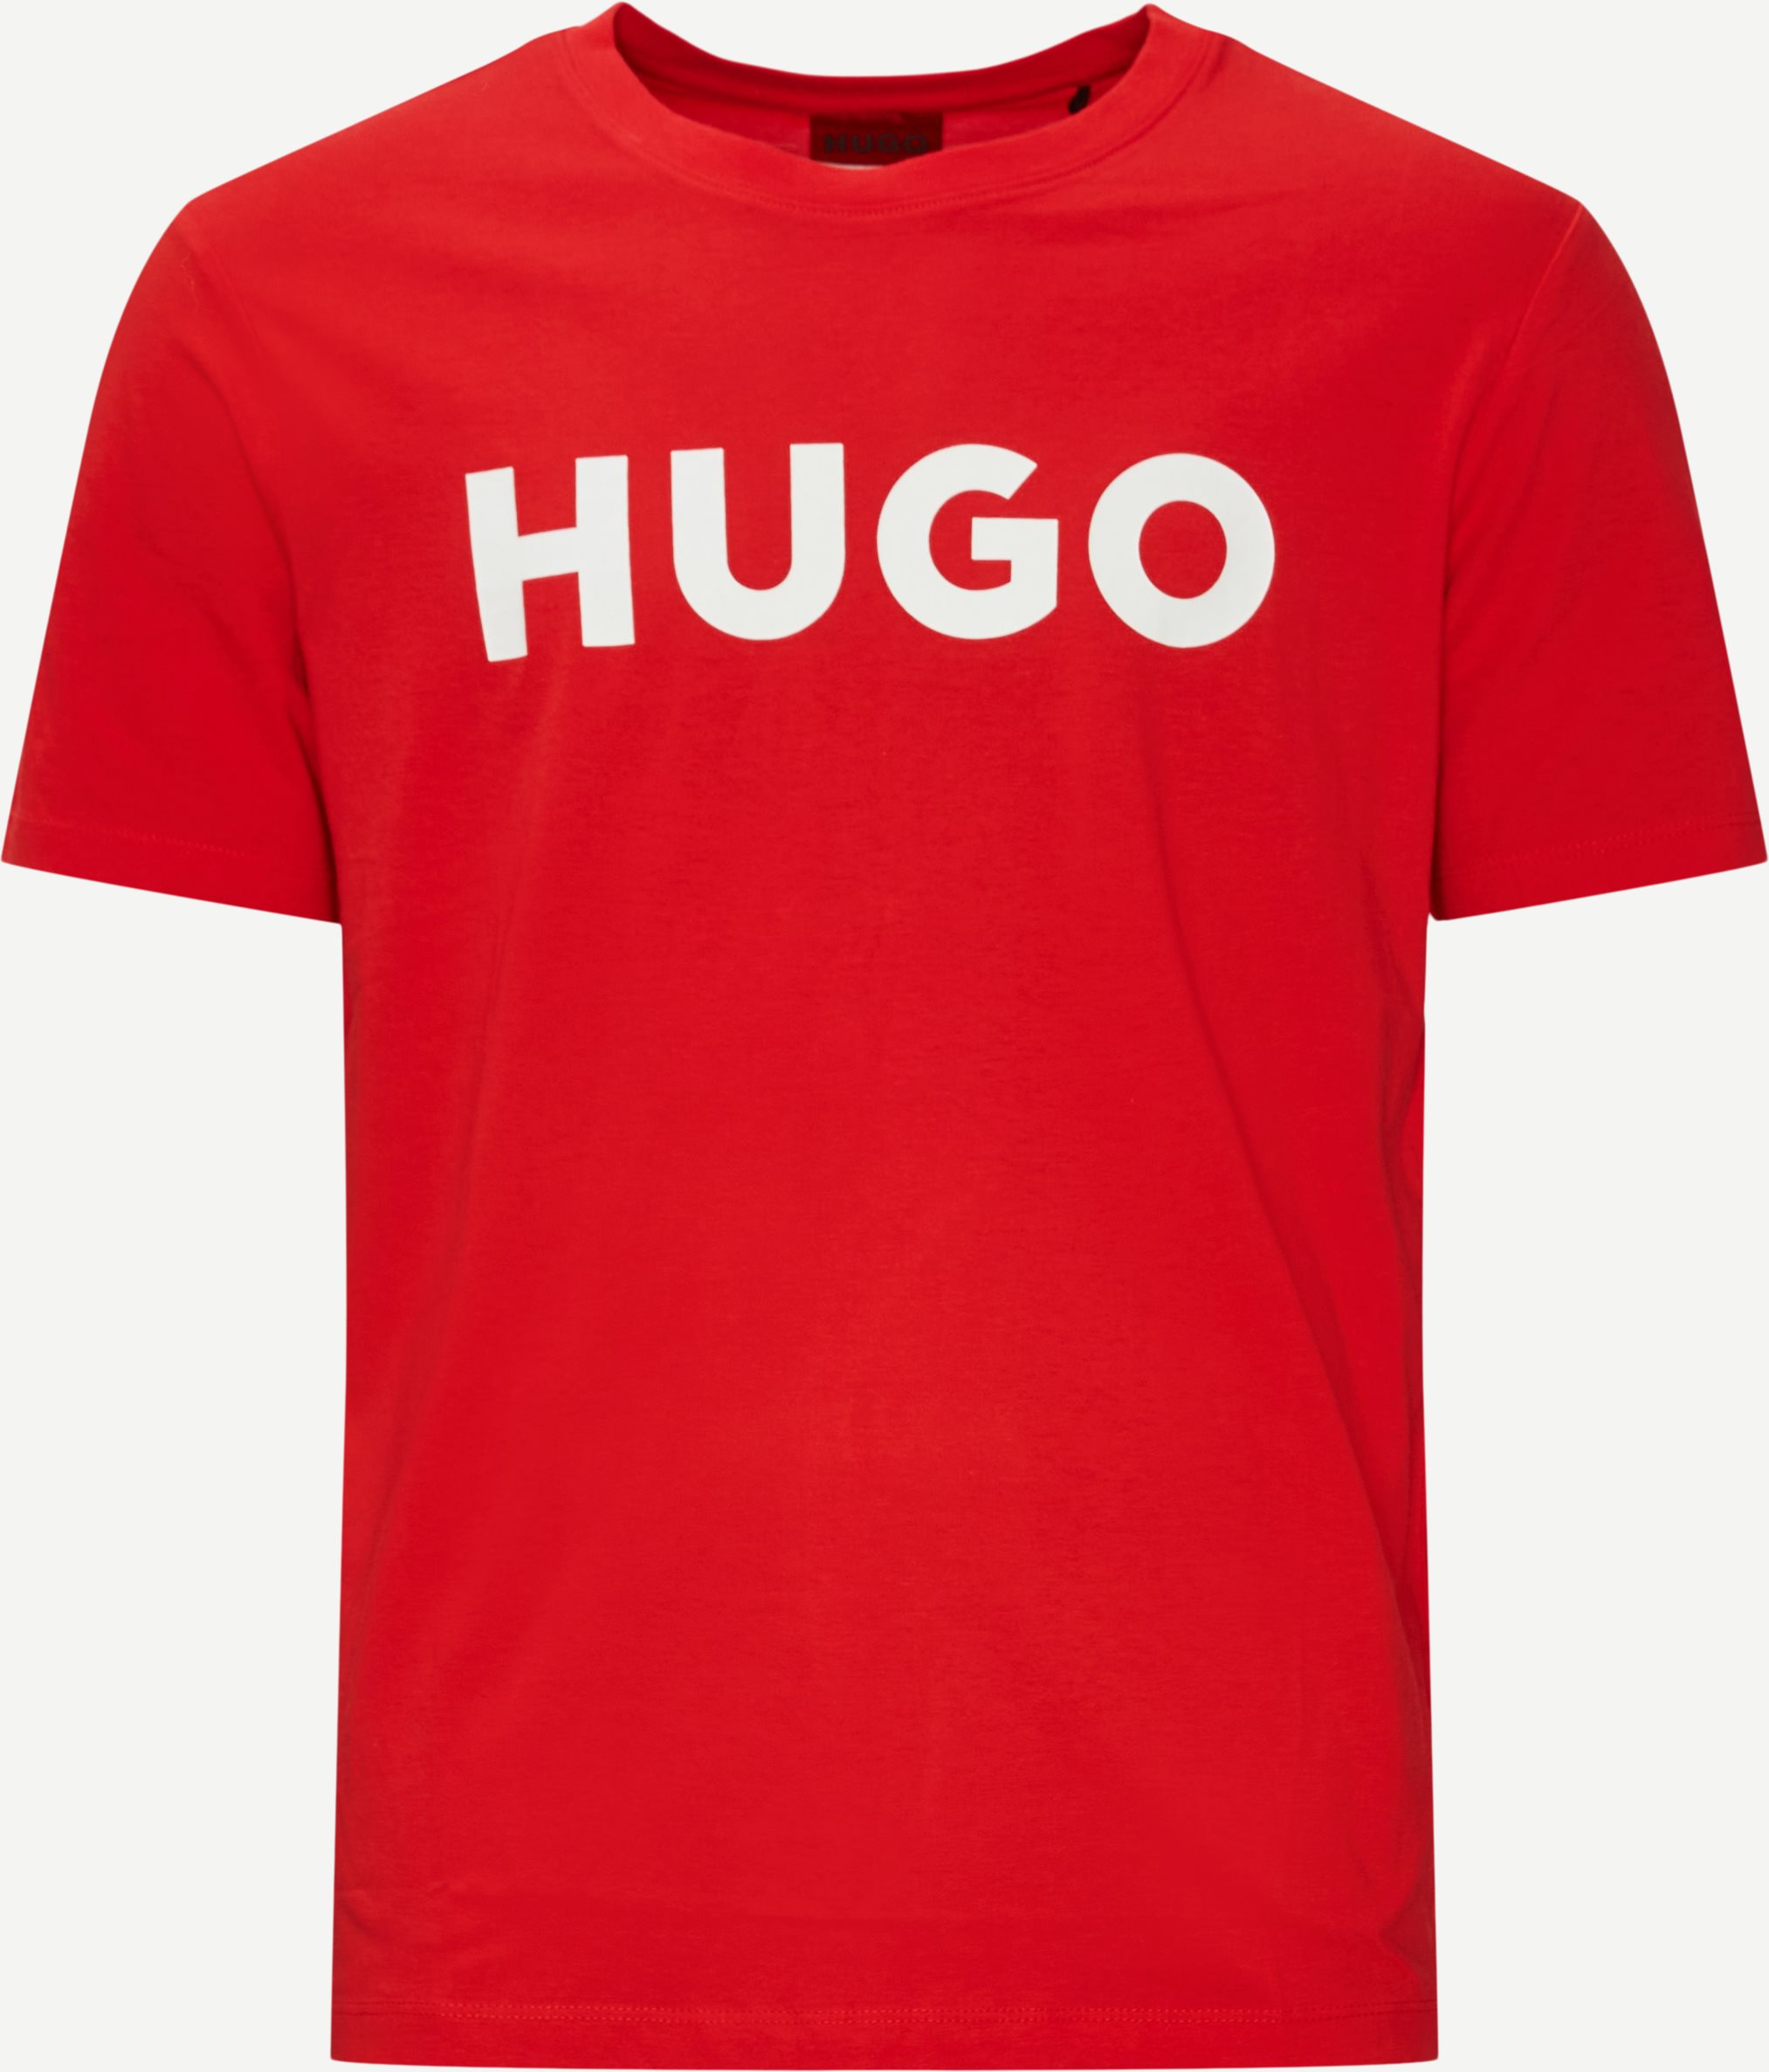 HUGO - Buy HUGO fashion for men online at Kaufmann